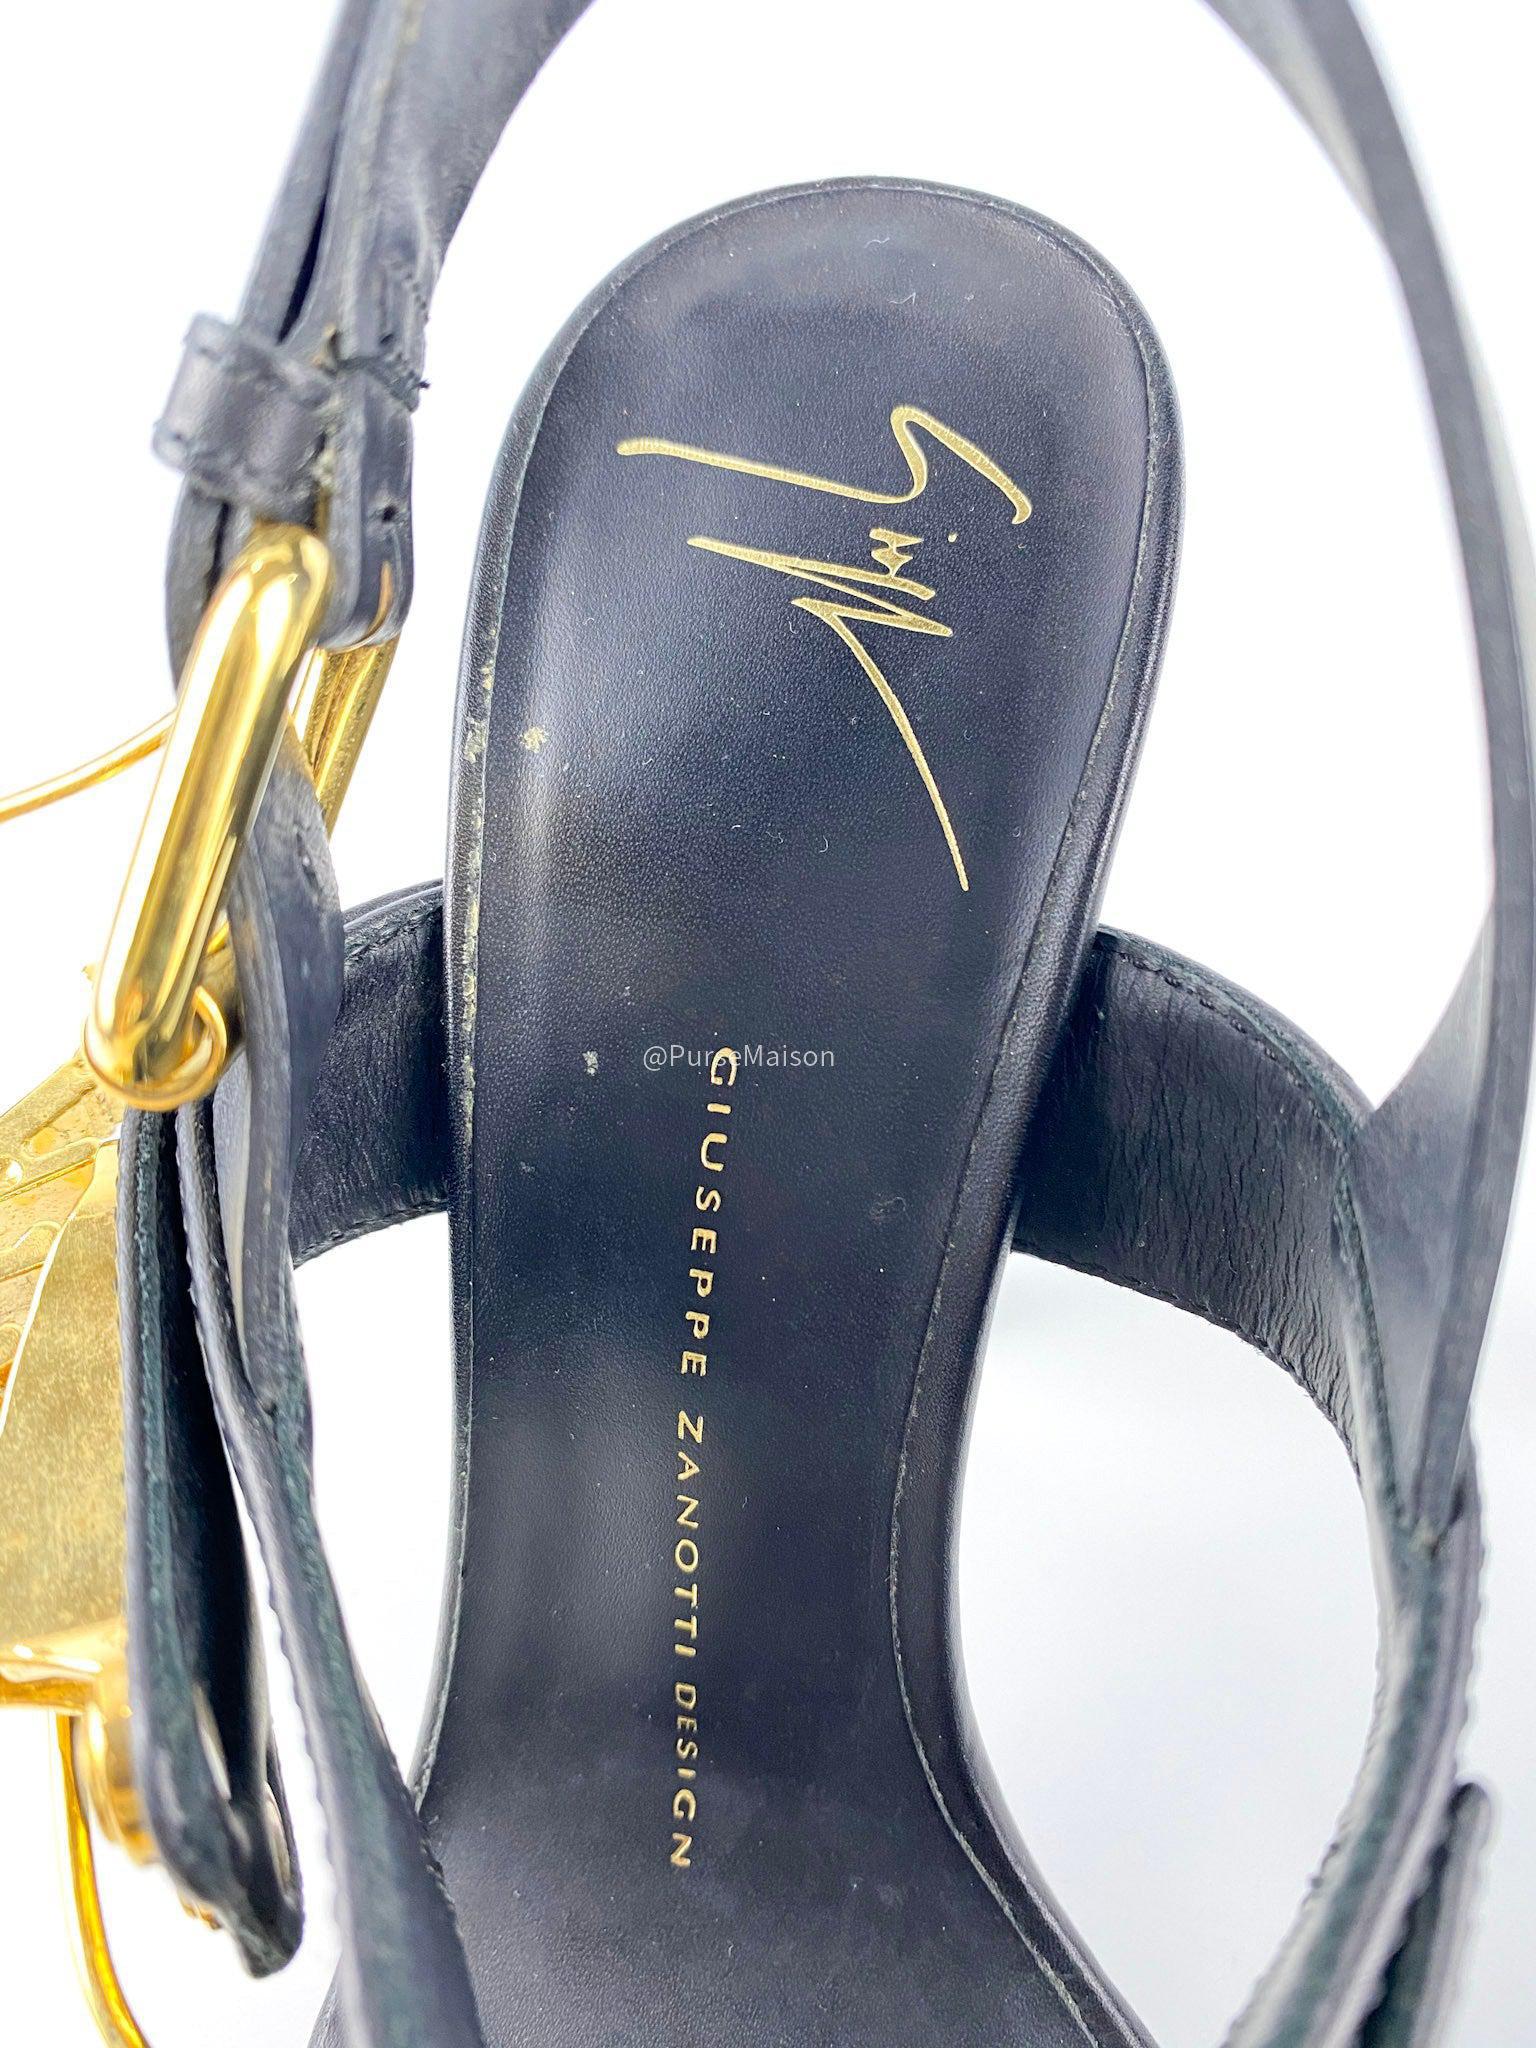 Giuseppe Zanotti Coline Ski Buckle Leather Sandals Size 37 EUR